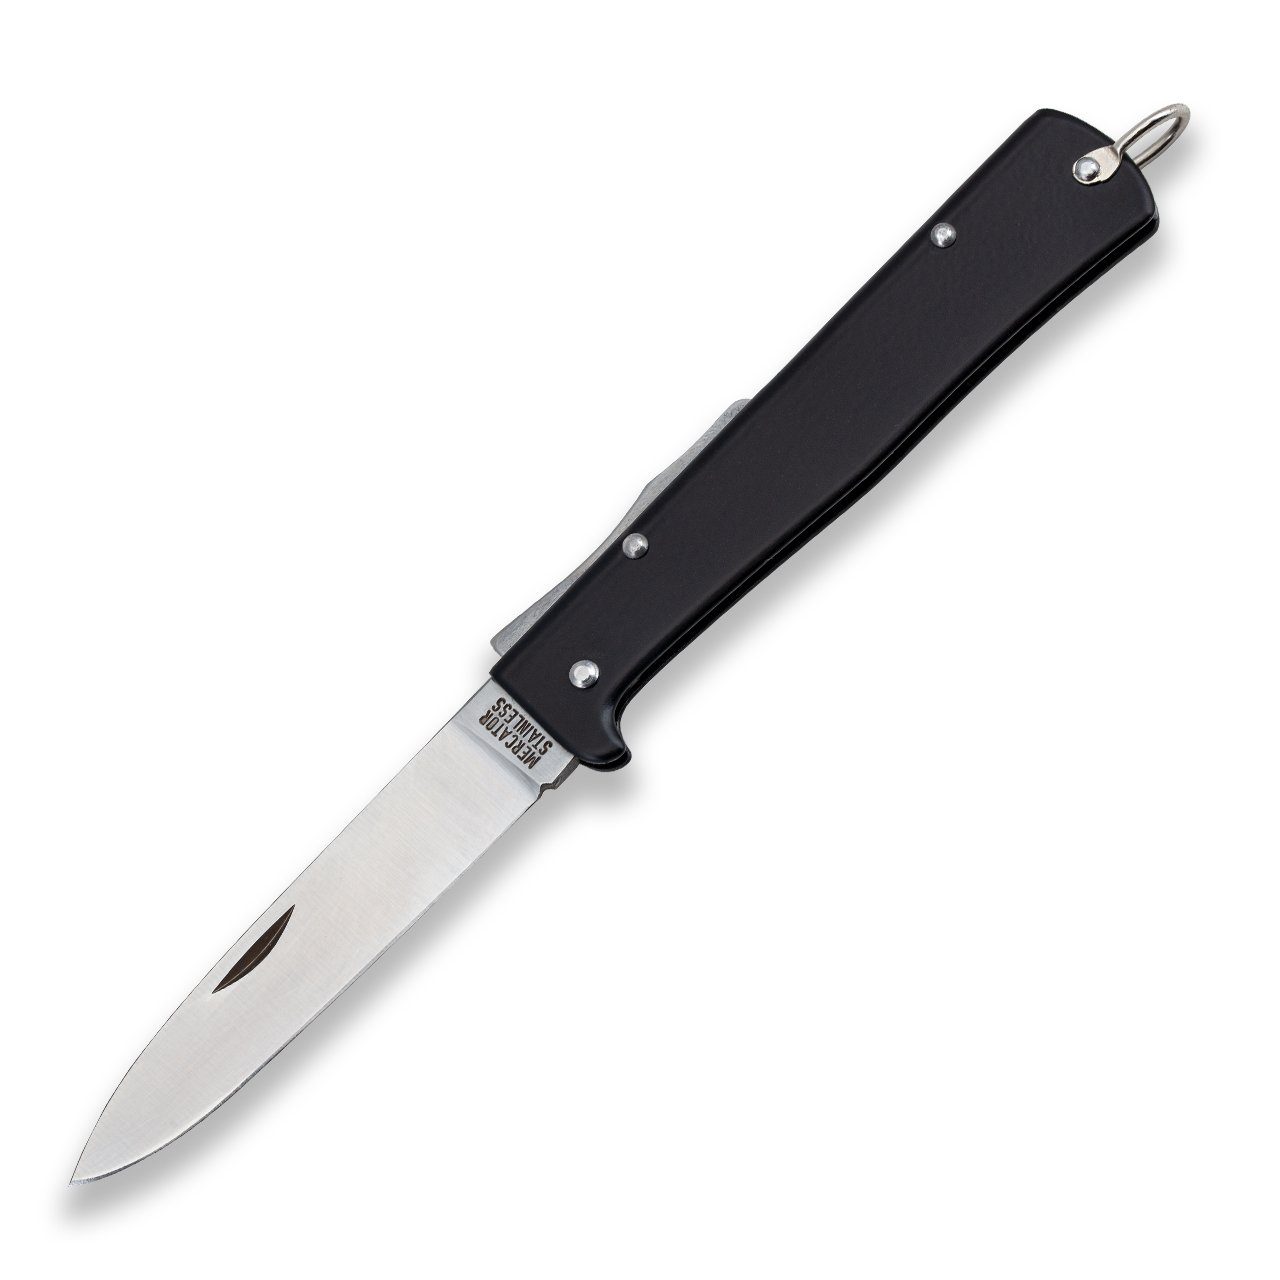 Otter Messer Taschenmesser Mercator-Messer groß schwarz Stahlgriff Backlock, Klinge rostfrei